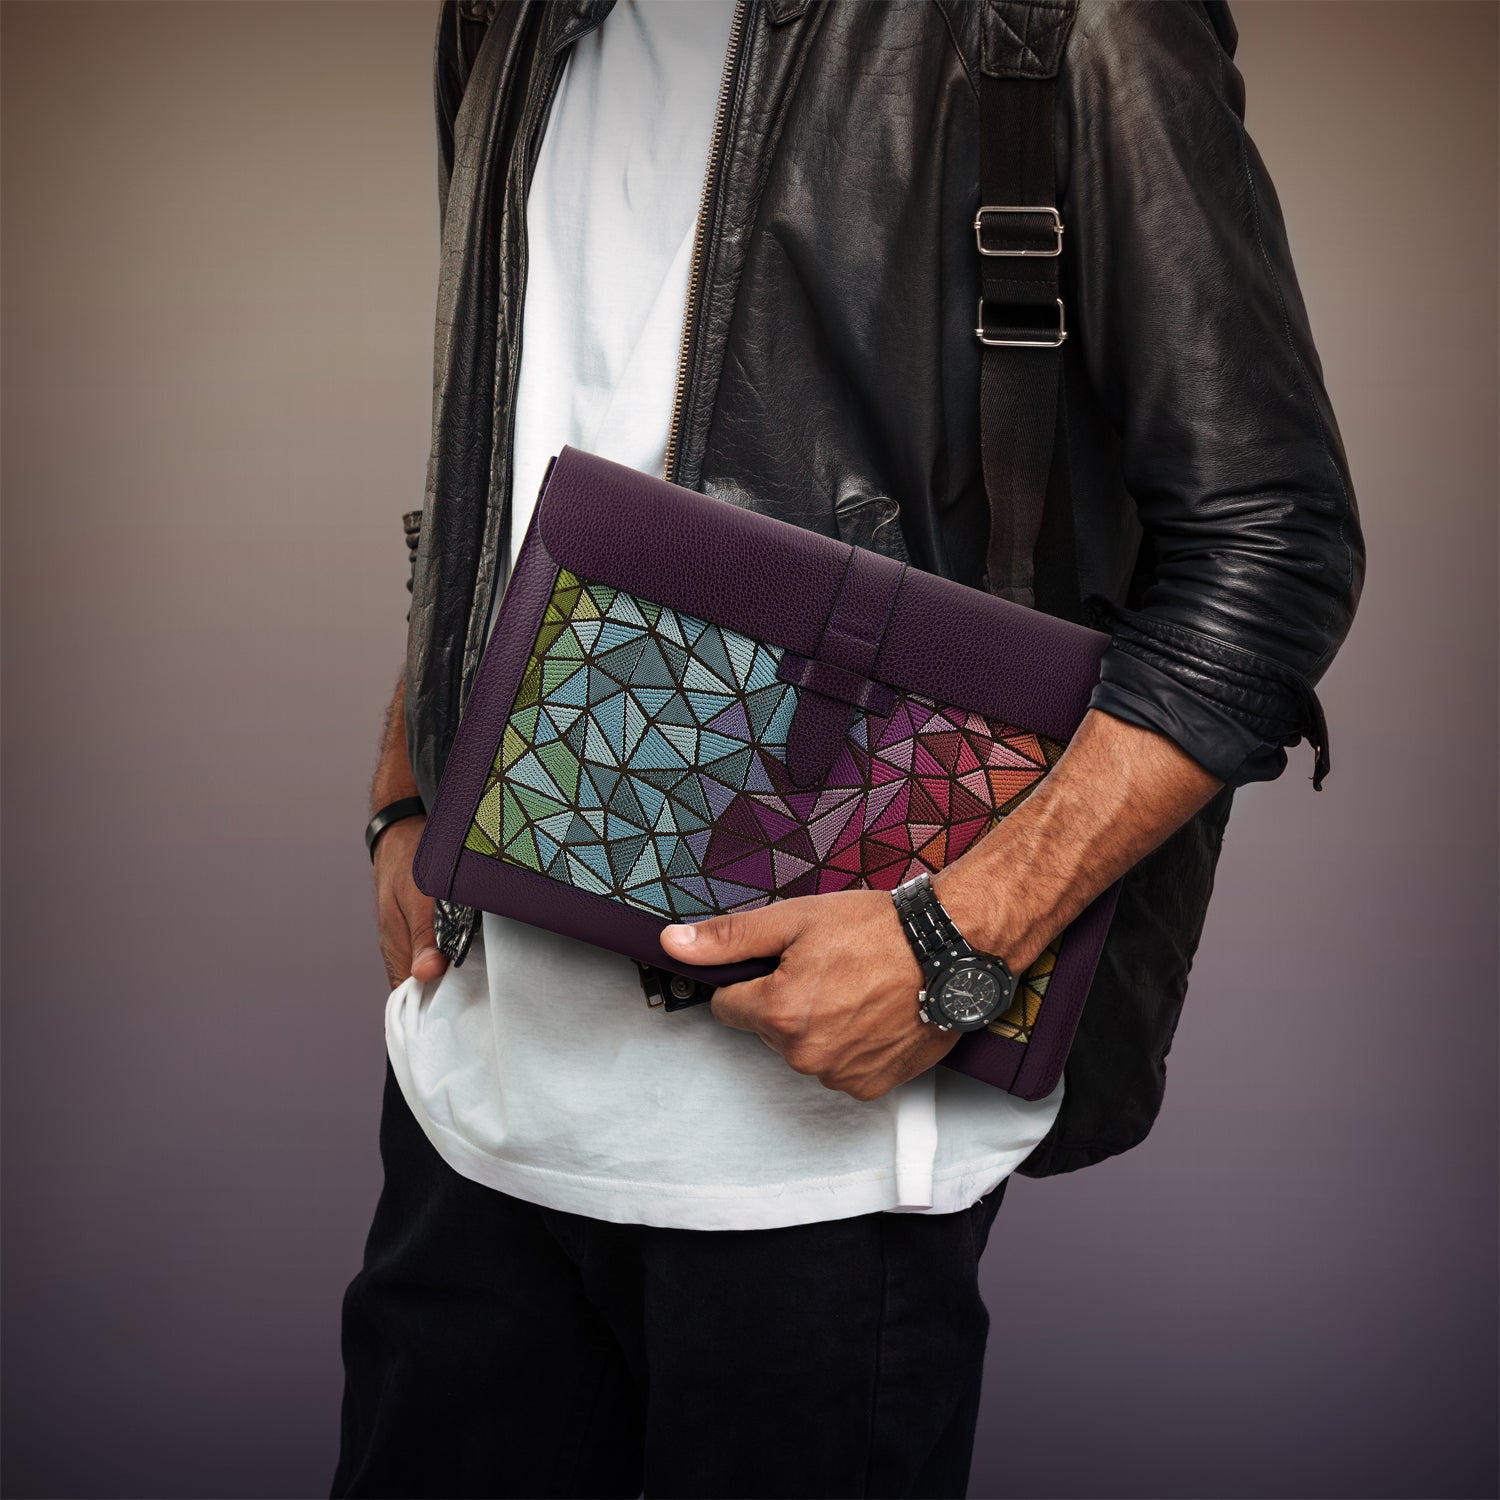 Londo Top Grain Leather Sleeve Bohemian Bag for MacBook Pro